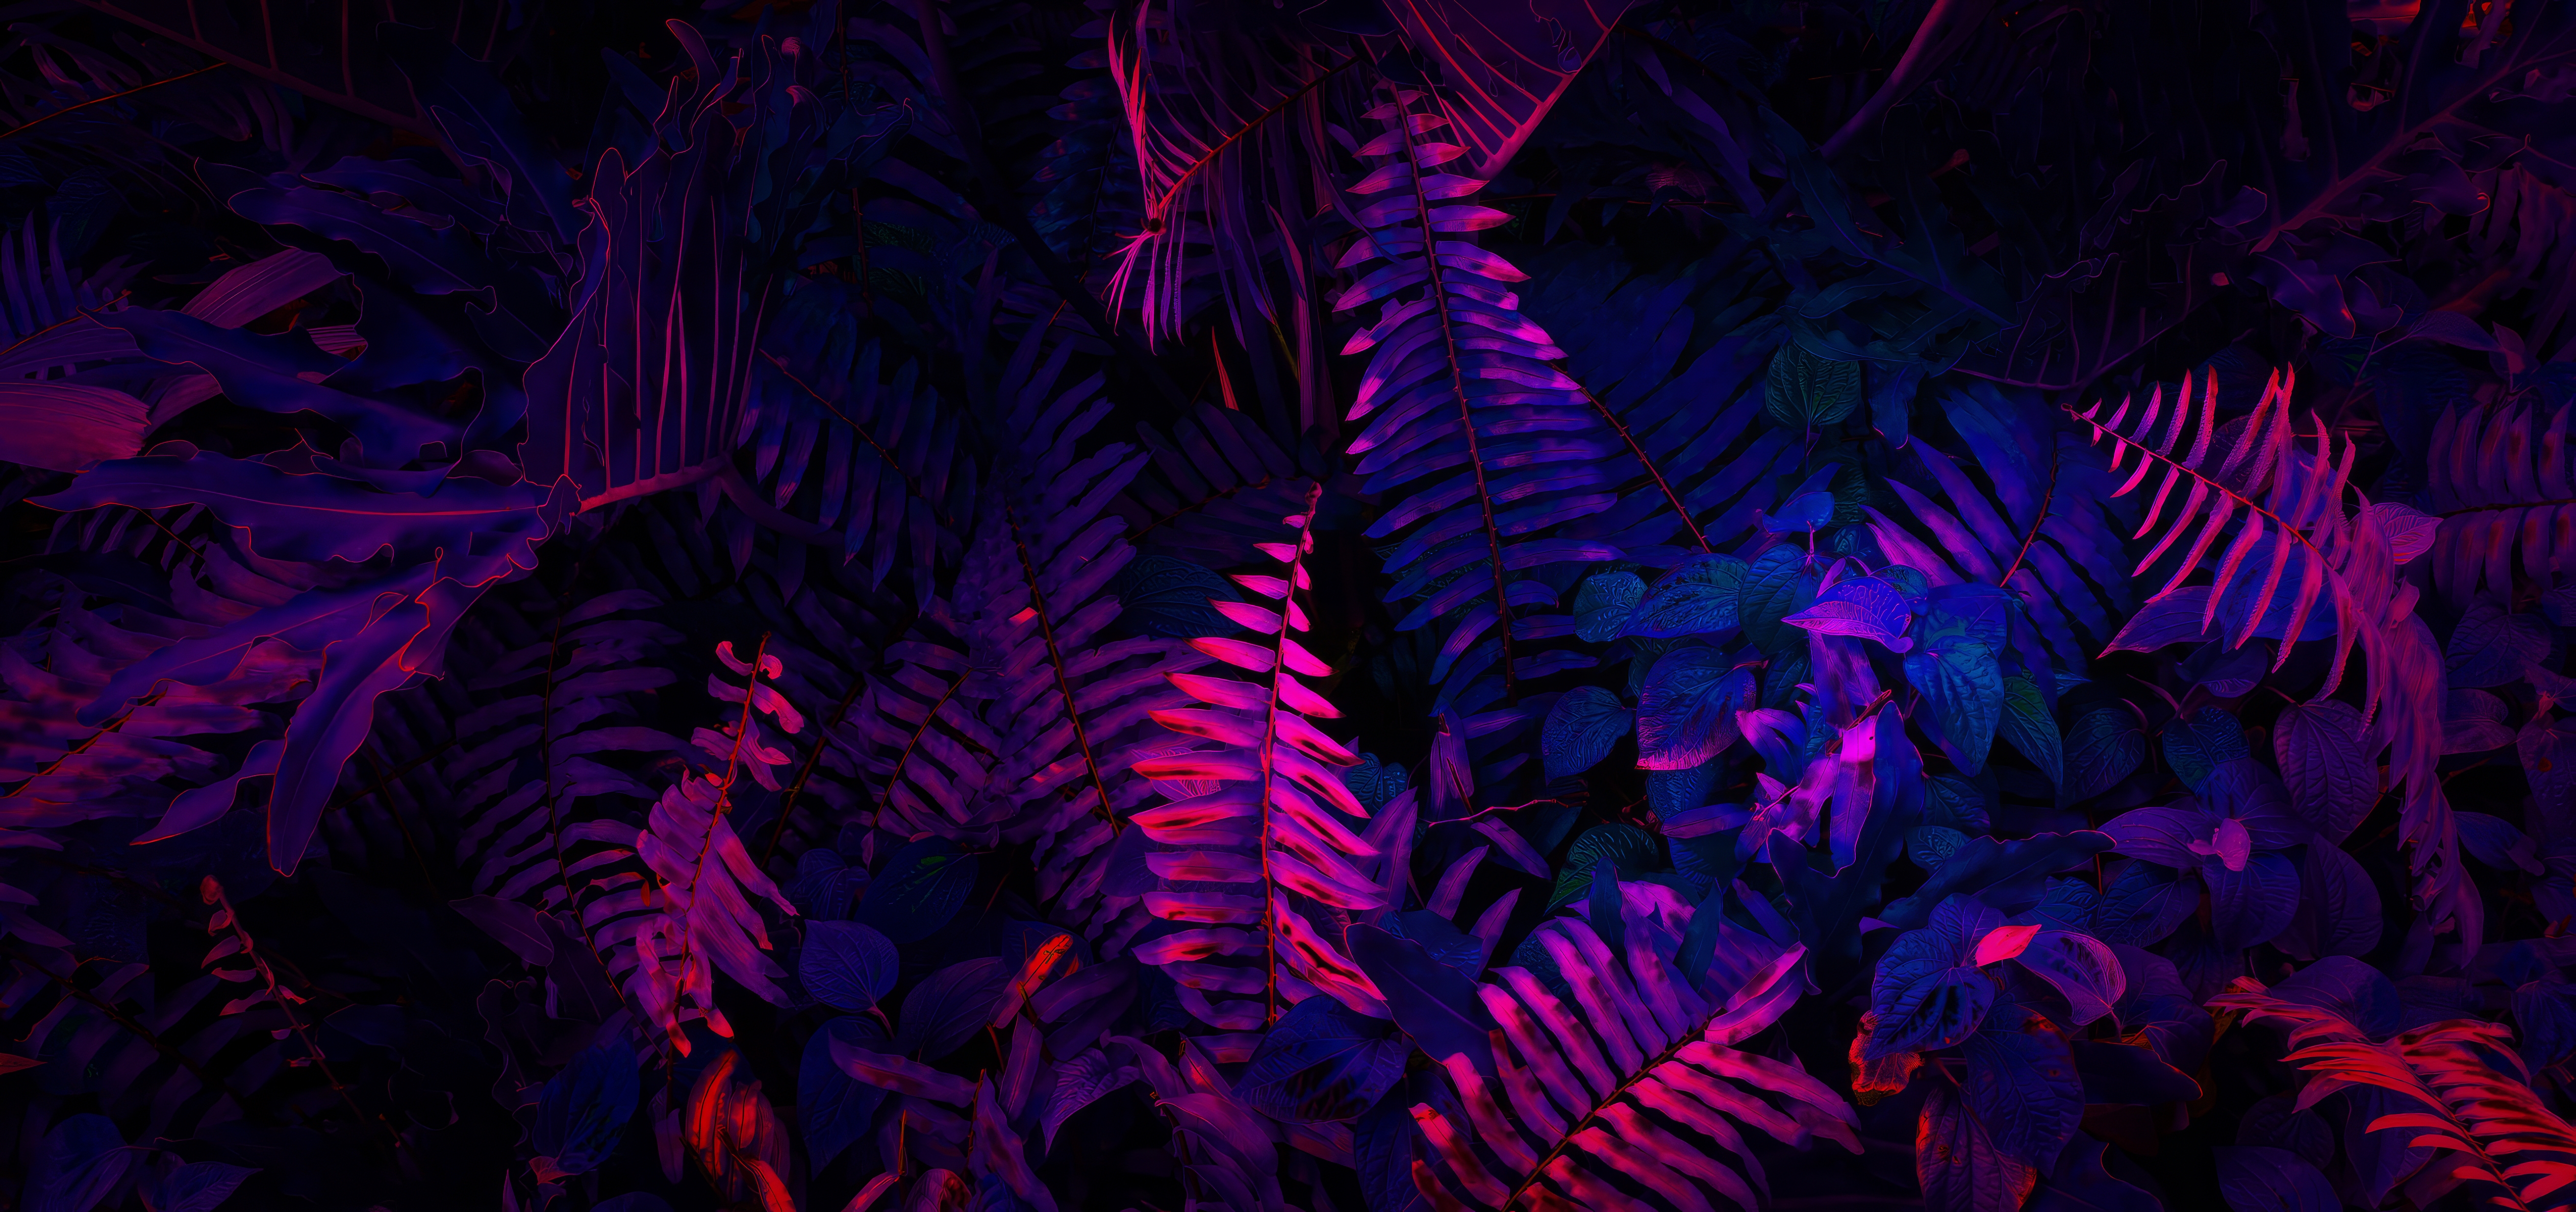 General 5050x2376 neon ferns plants nature blue pink dark red AI art exotic